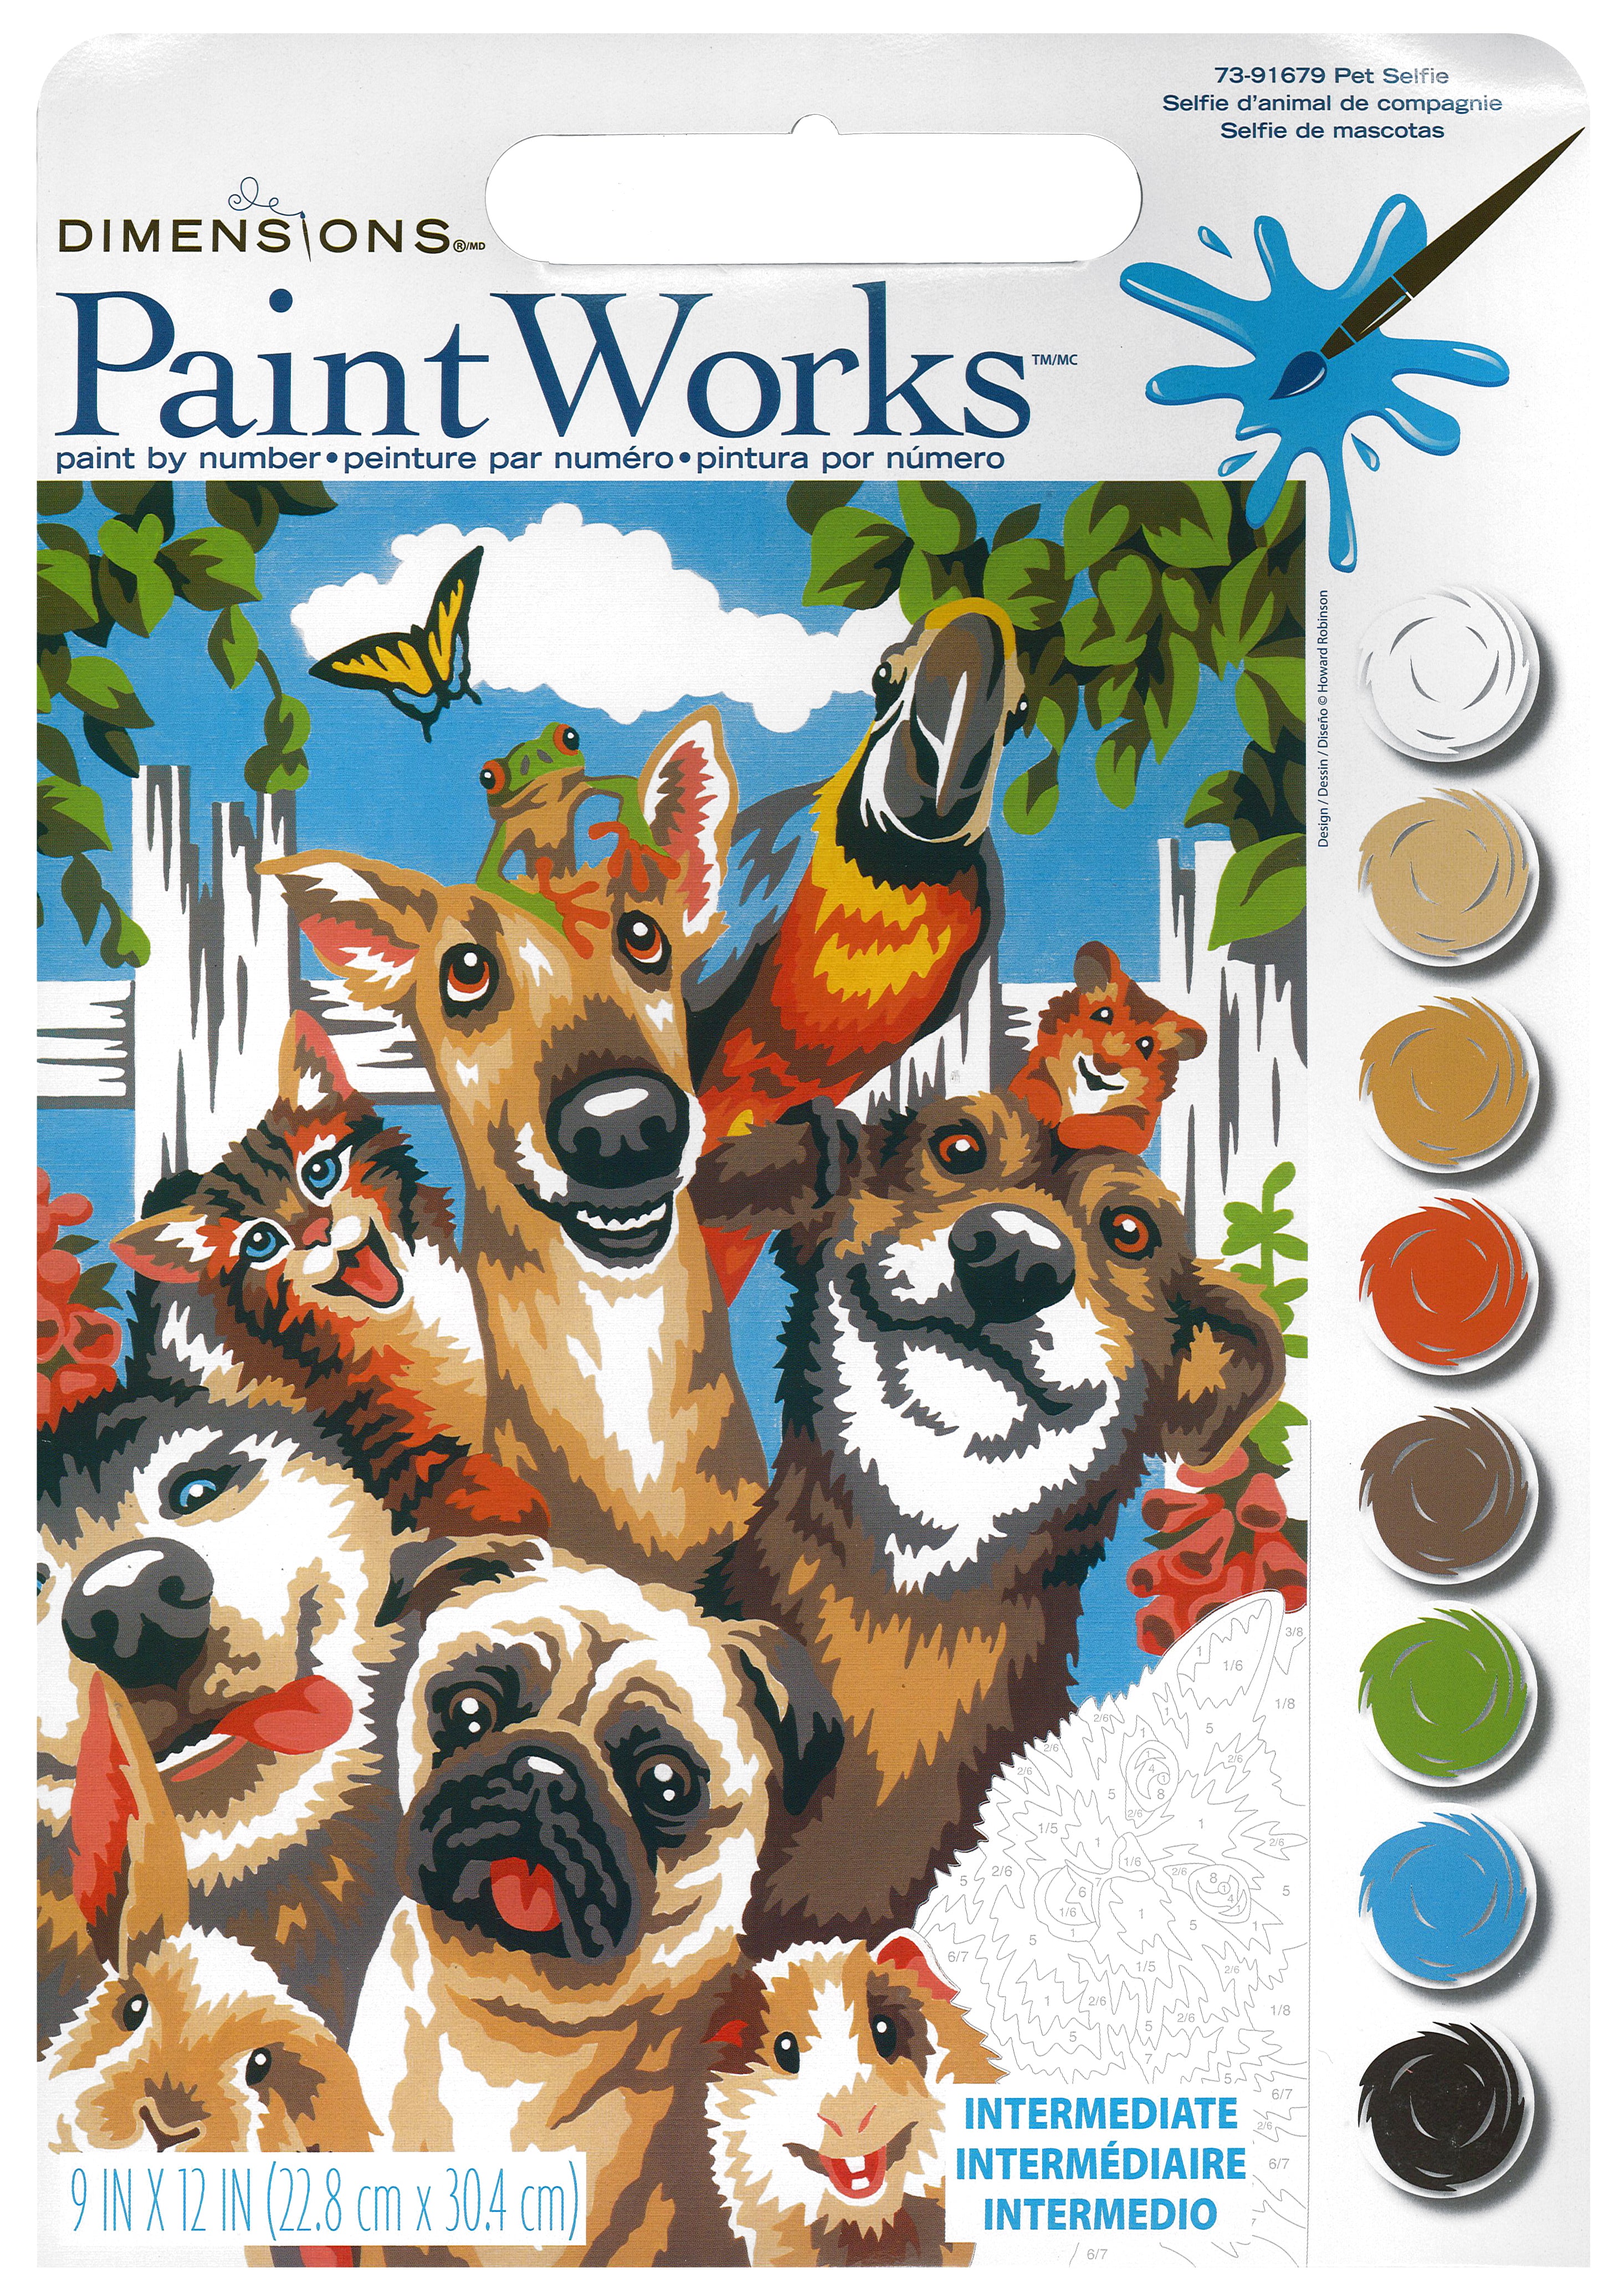 PaintWorks - Paint By Numbers - Pet Selfie | Event Horizon Hobbies CA